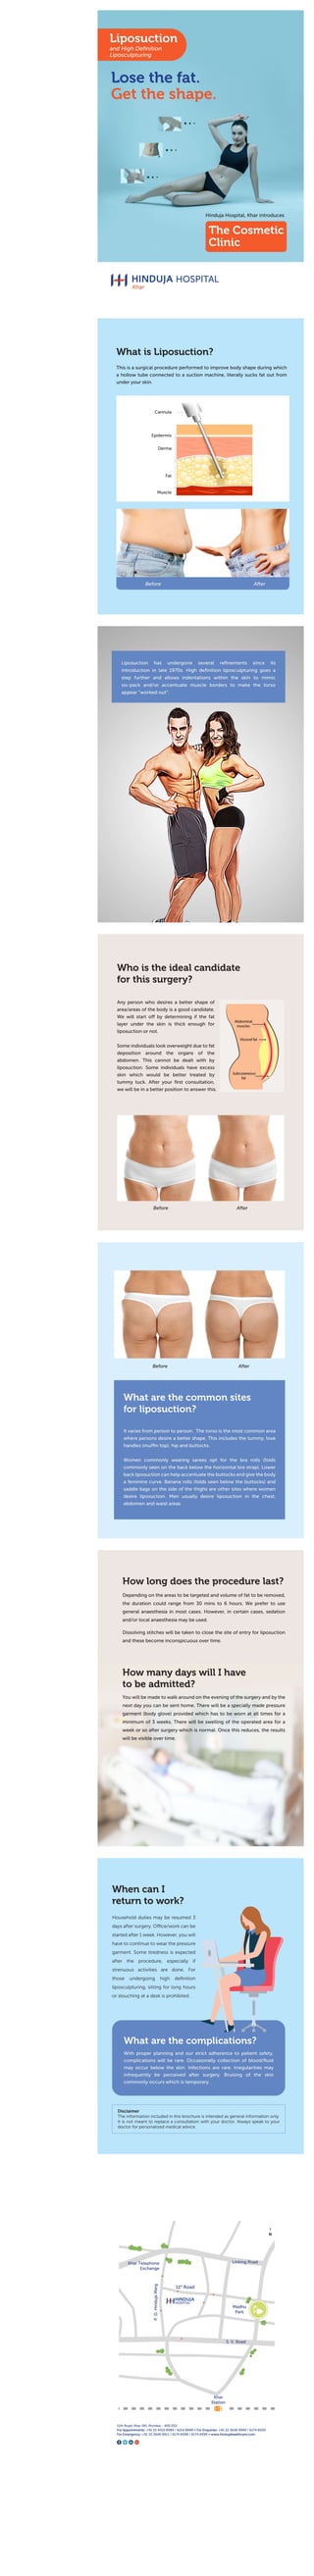 LiposuctionLiposuction: Lose fat. Get the shape.